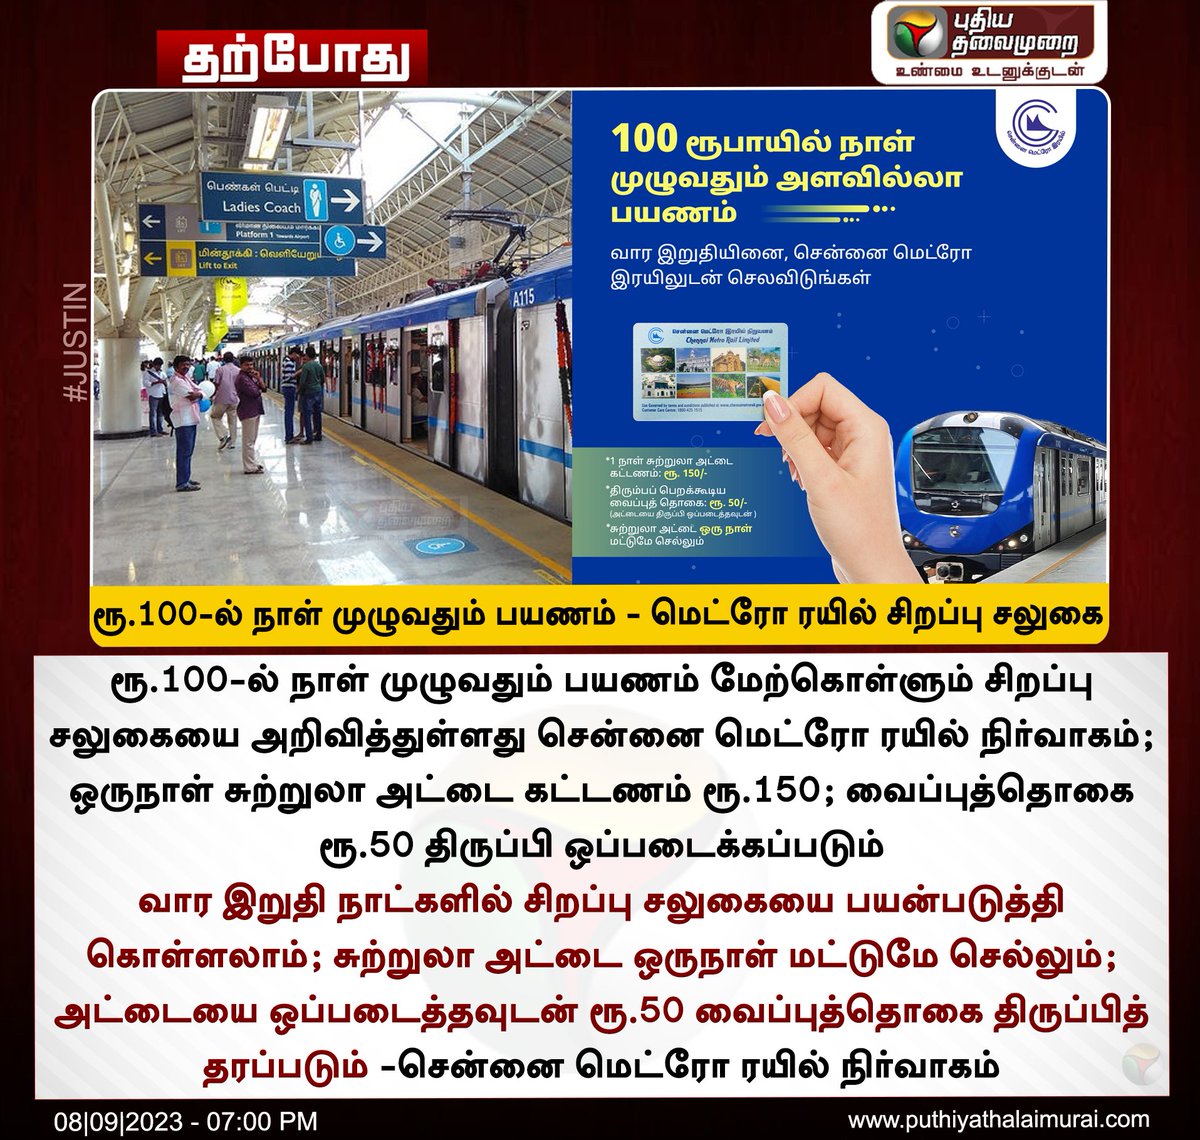 #JUSTIN | ரூ.100ல் நாள் முழுவதும் பயணம் - மெட்ரோ ரயில் சிறப்பு சலுகை

#MetroRail | #ChennaiMetro | #Metro |  #ChennaiMetroRail | @cmrlofficial